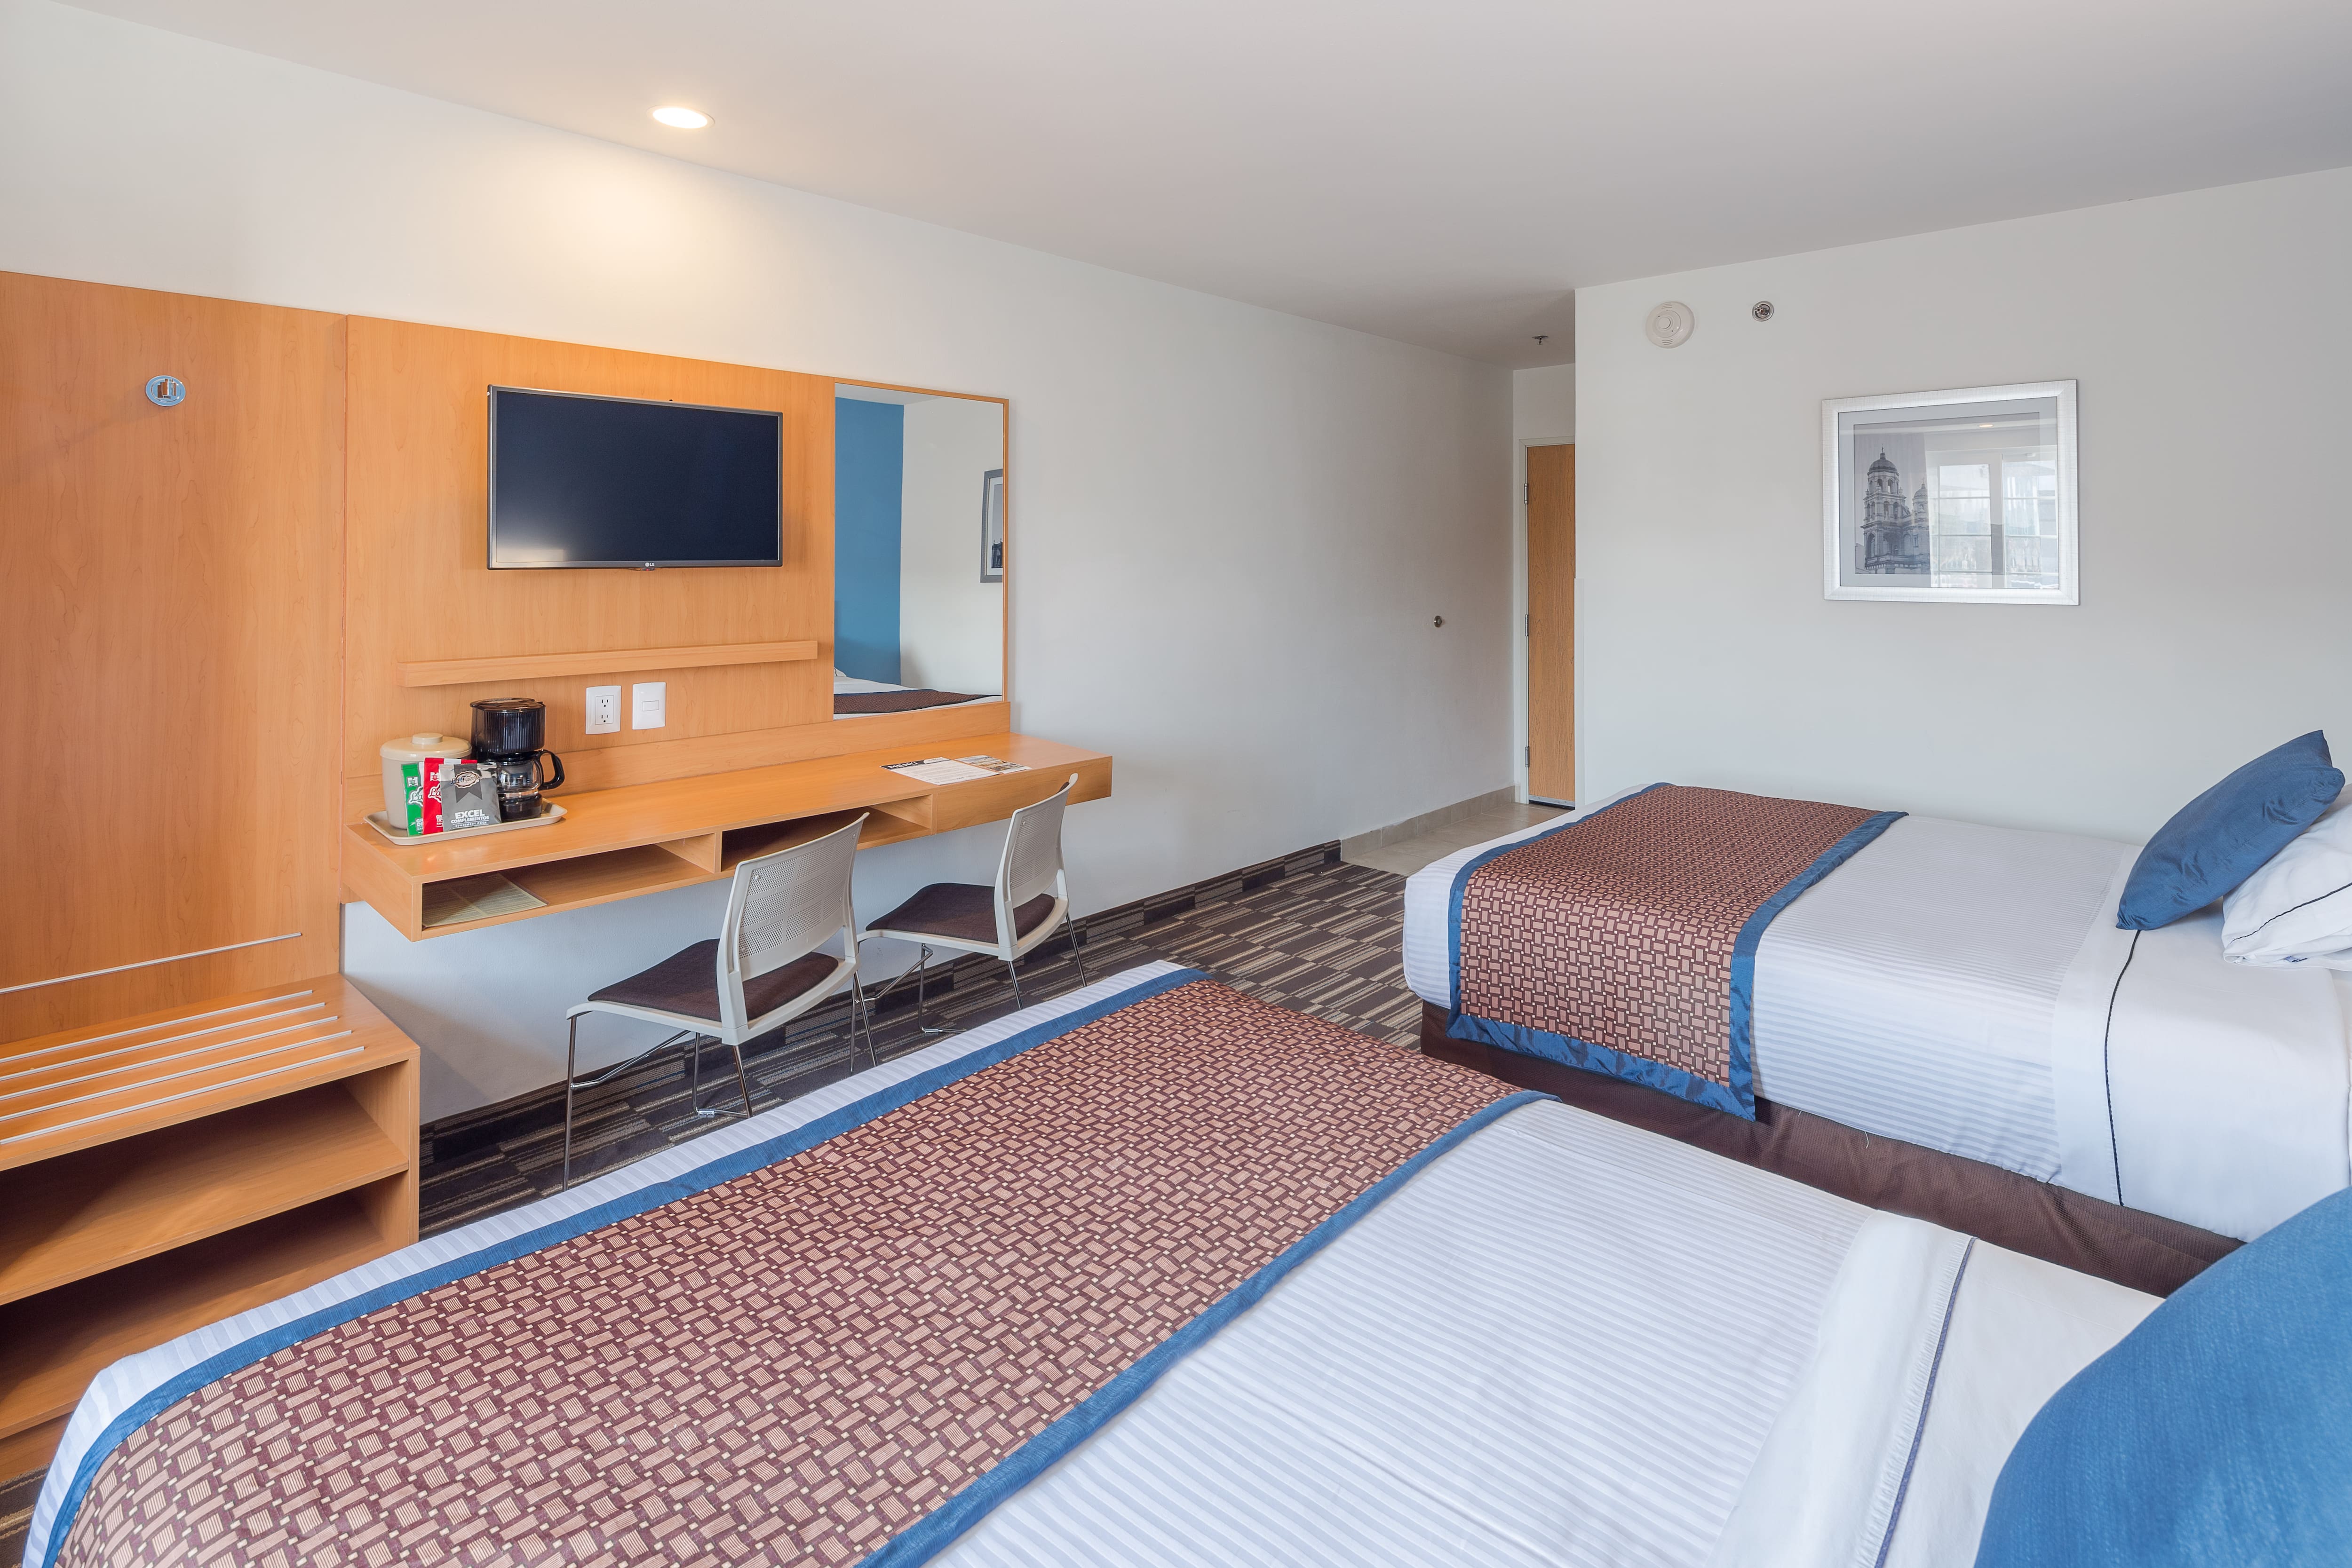 Discount [80% Off] Sleep Inn Culiacan Mexico | Hotel Room ...